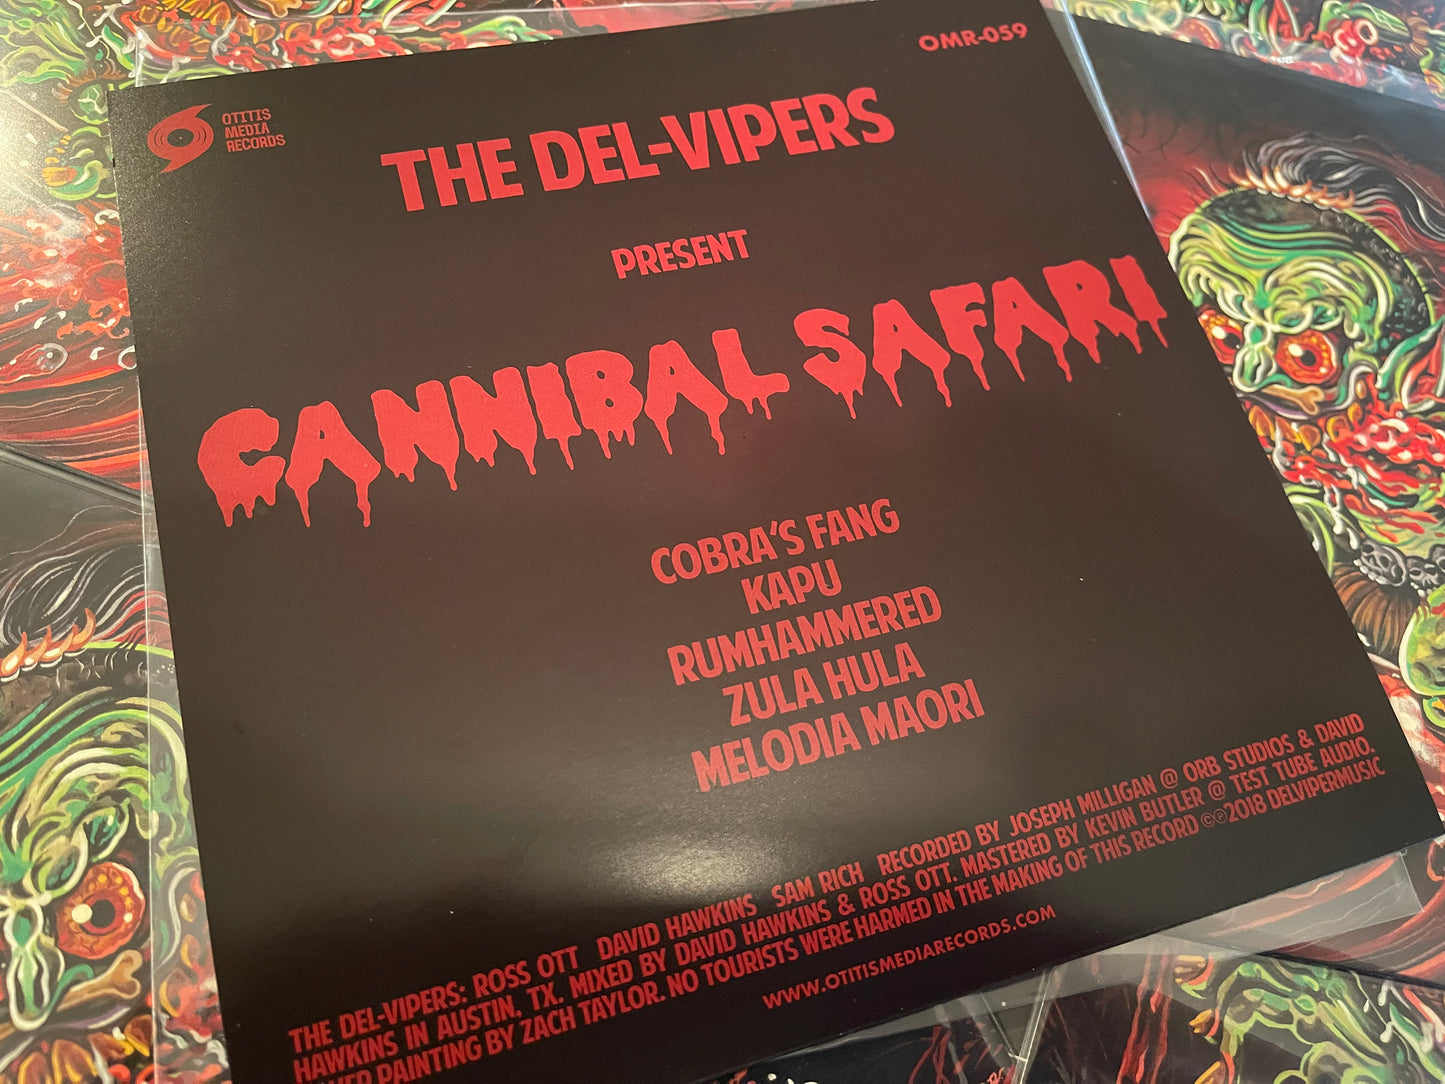 OMR-059 The Del Vipers “Cannibal Safari” 7 inch EP (Colored Vinyl”